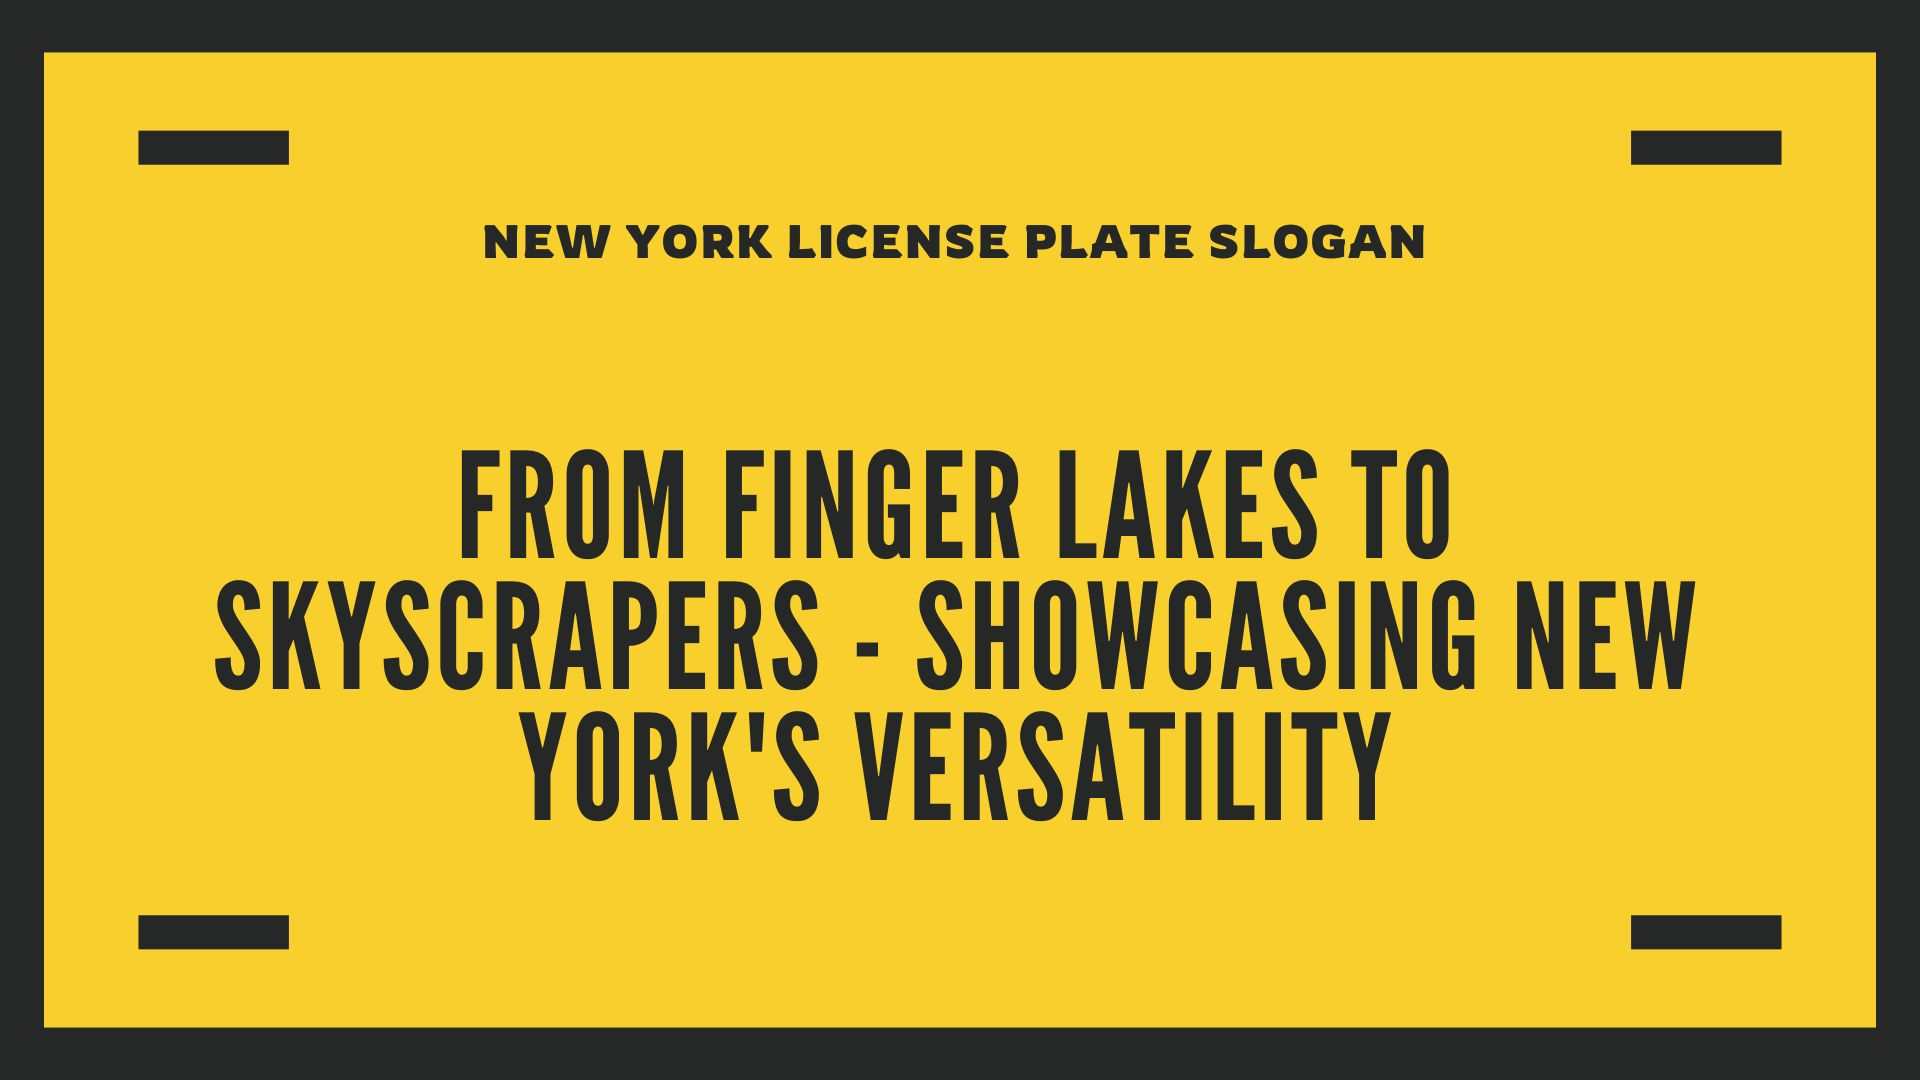 New York License Plate Slogan